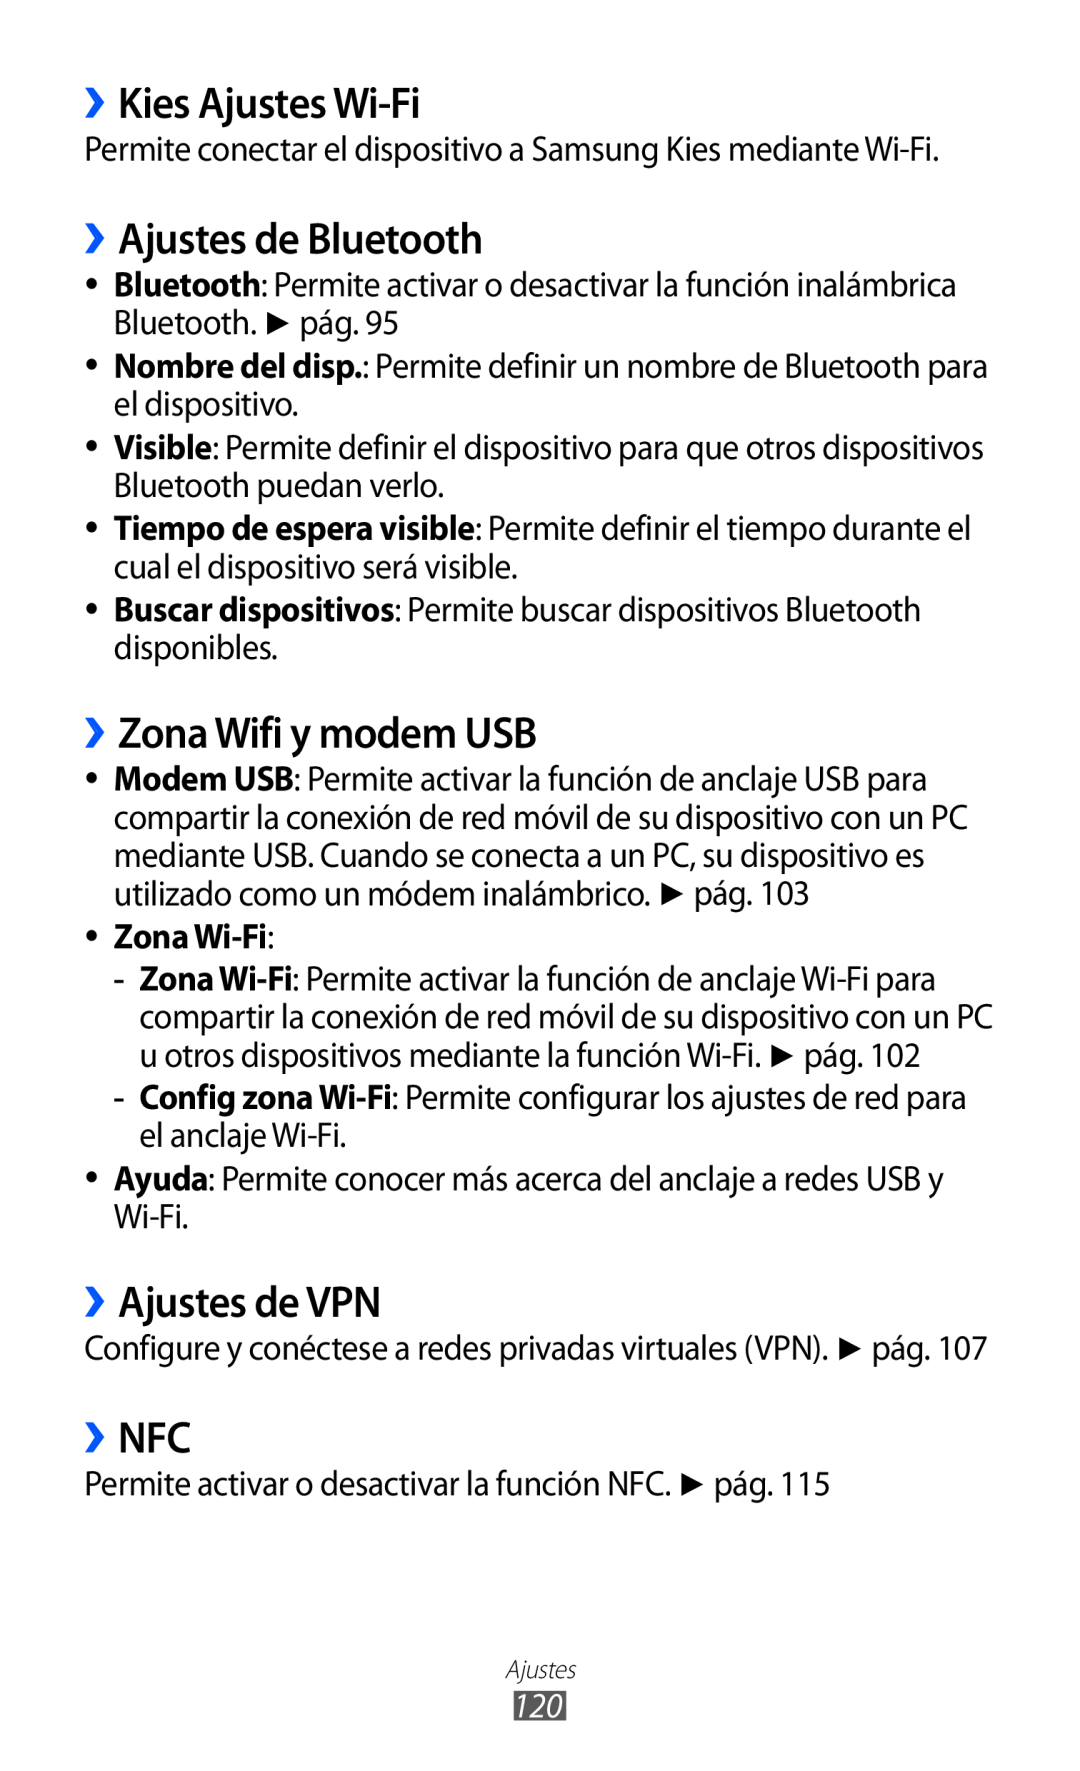 Samsung GT-S6500XKAAMN ››Kies Ajustes Wi-Fi, ››Ajustes de Bluetooth, ››Zona Wifi y modem USB, ››Ajustes de VPN, ››Nfc 